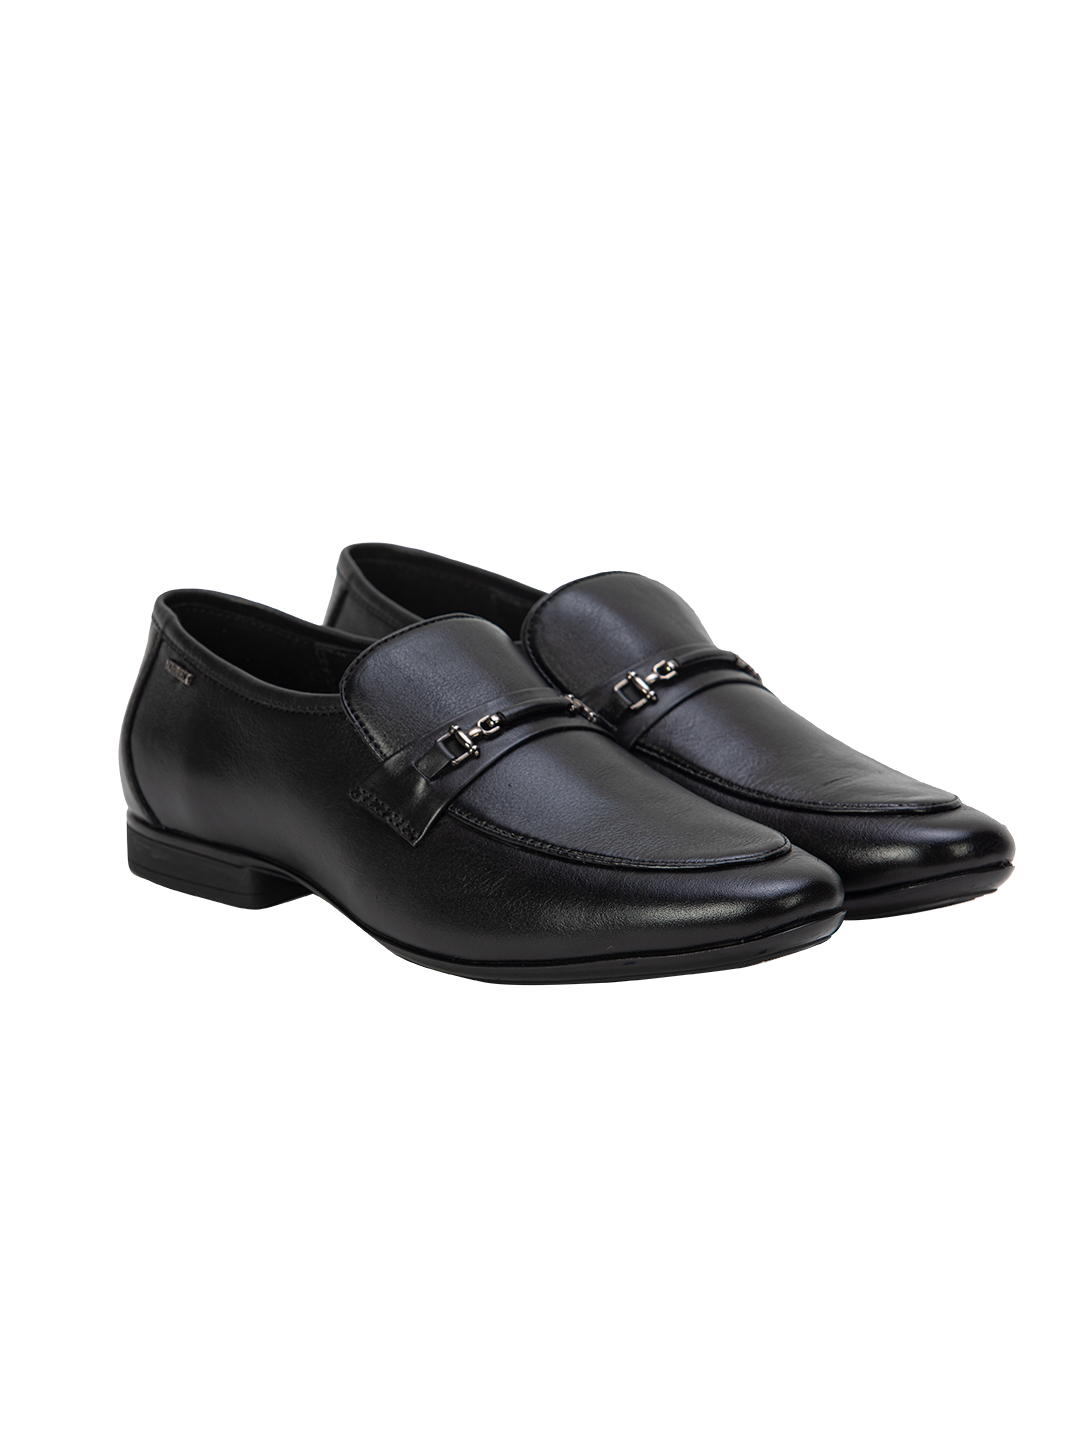 Buy Von Wellx Germany Comfort Black Glib Shoes Online in Tamil Nadu